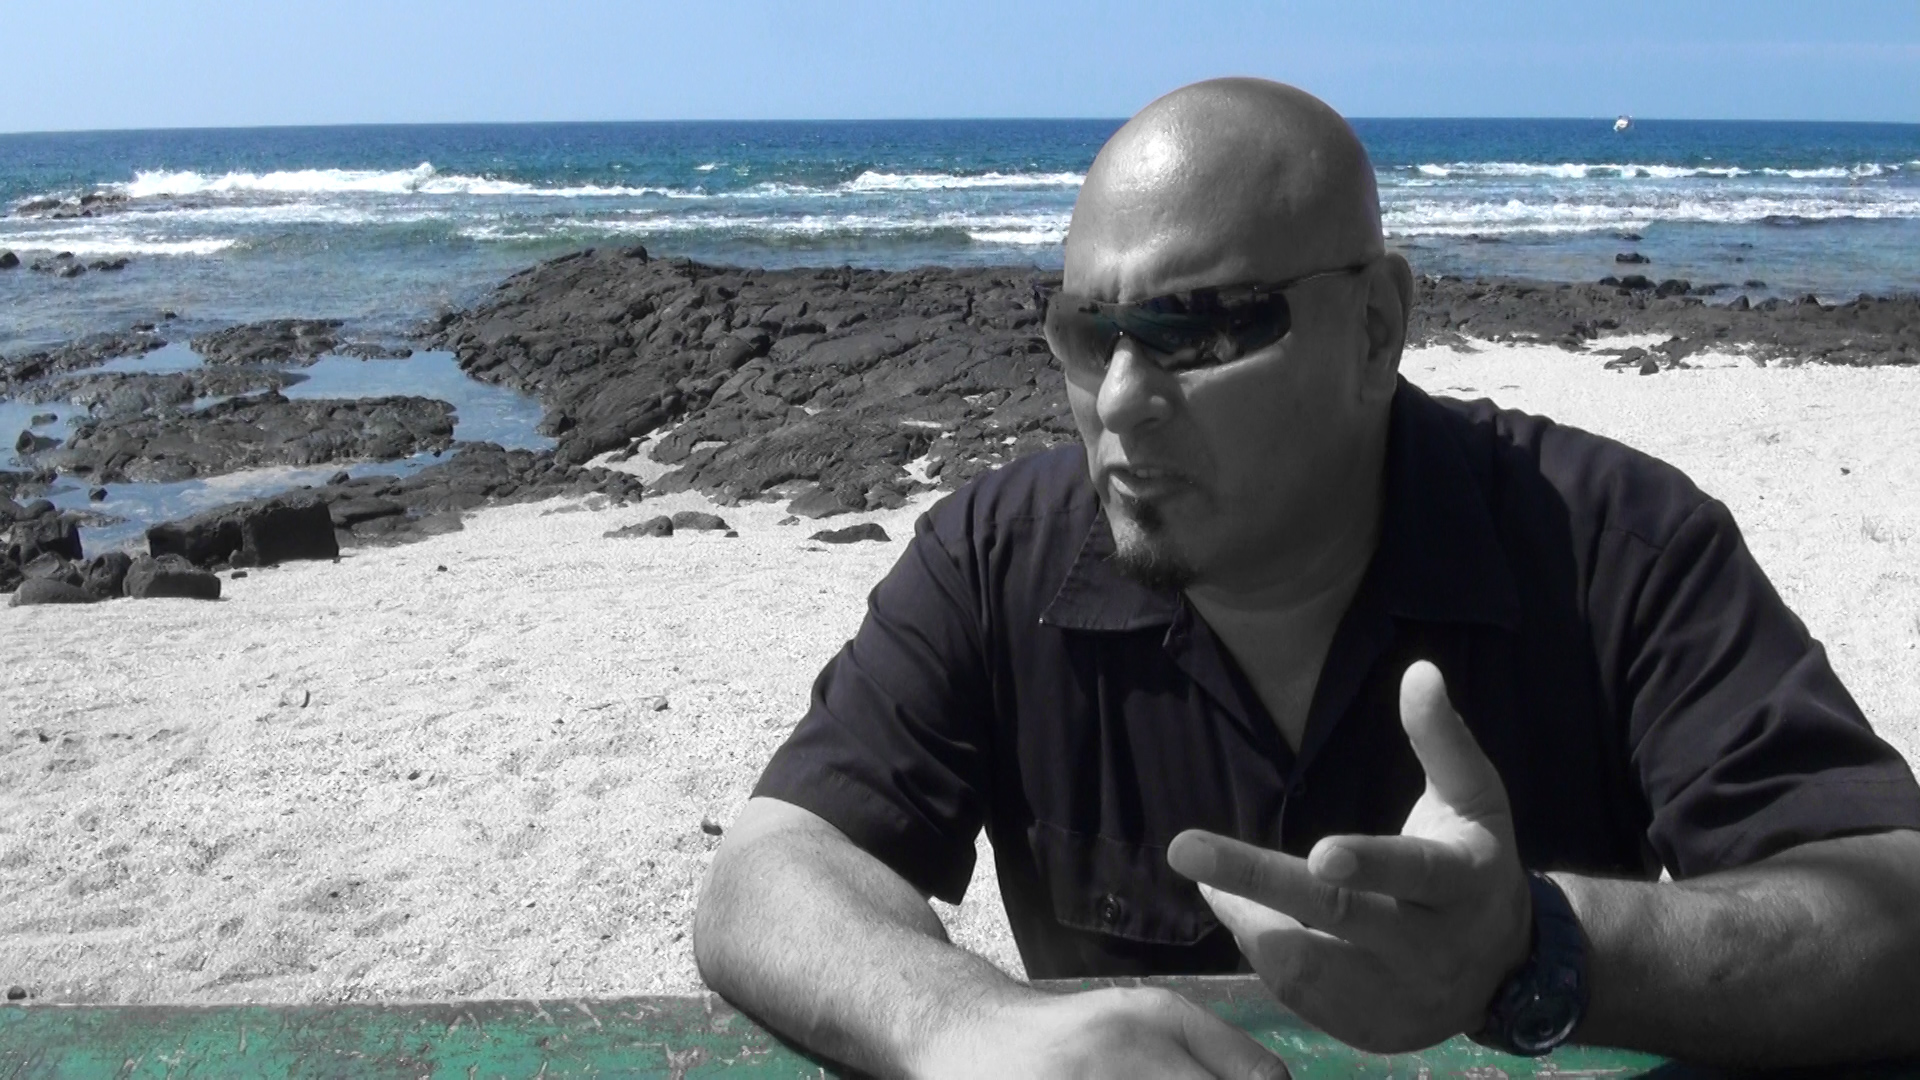 Bullitt (Richard Gonzalez) on the beach, from GIFilms latest production: PROJECT Z